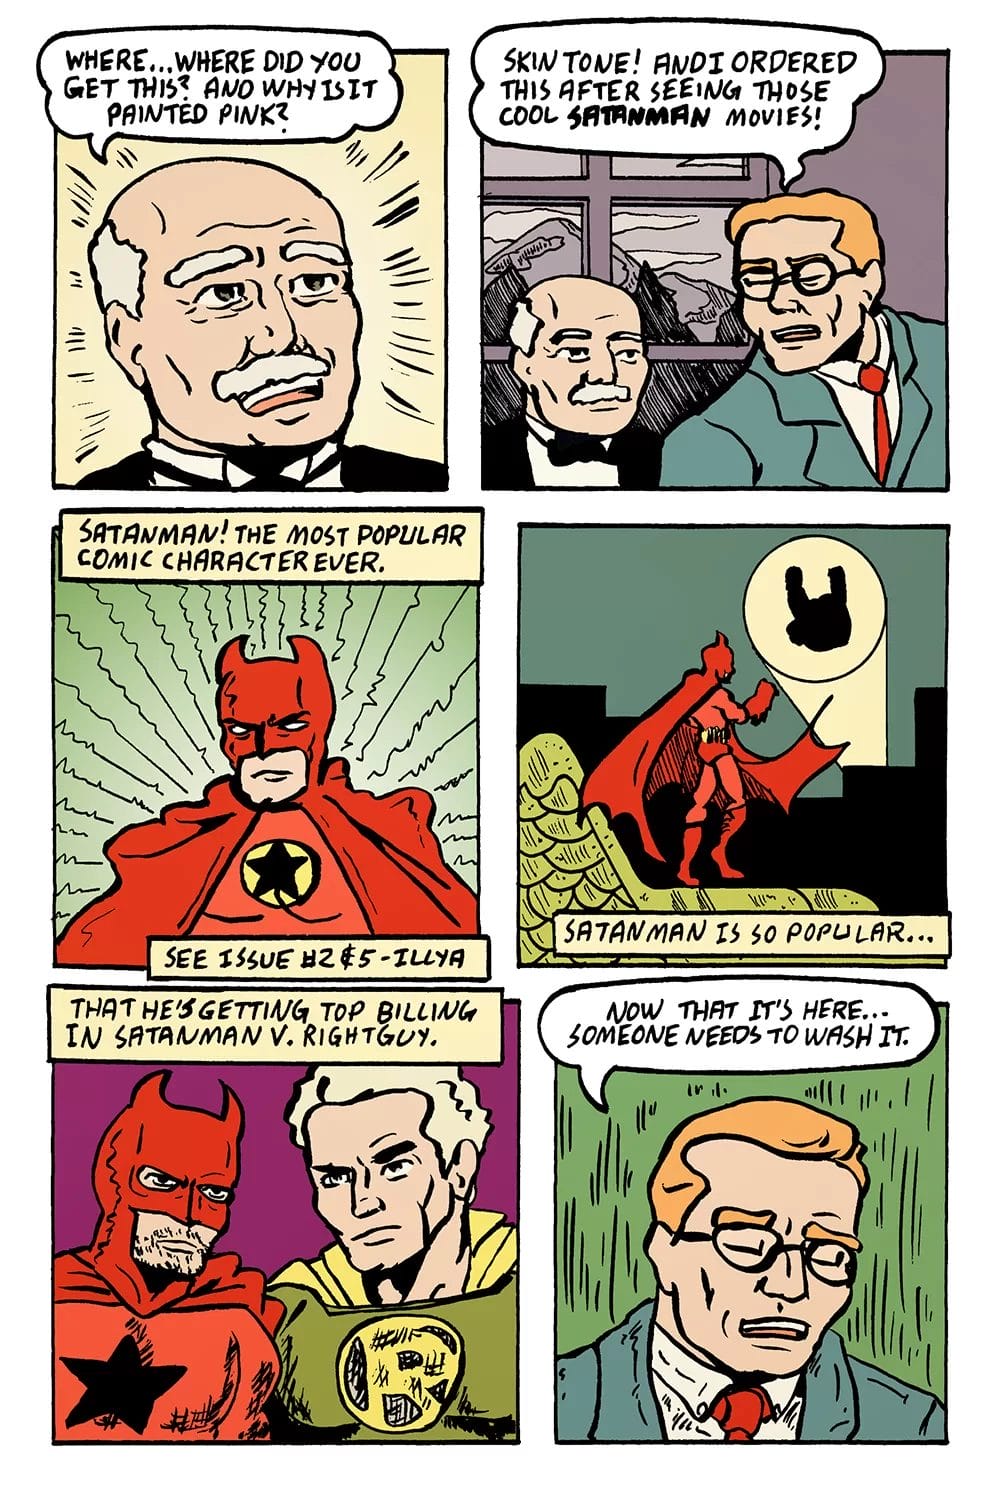 Satanman is the most popular comic hero.